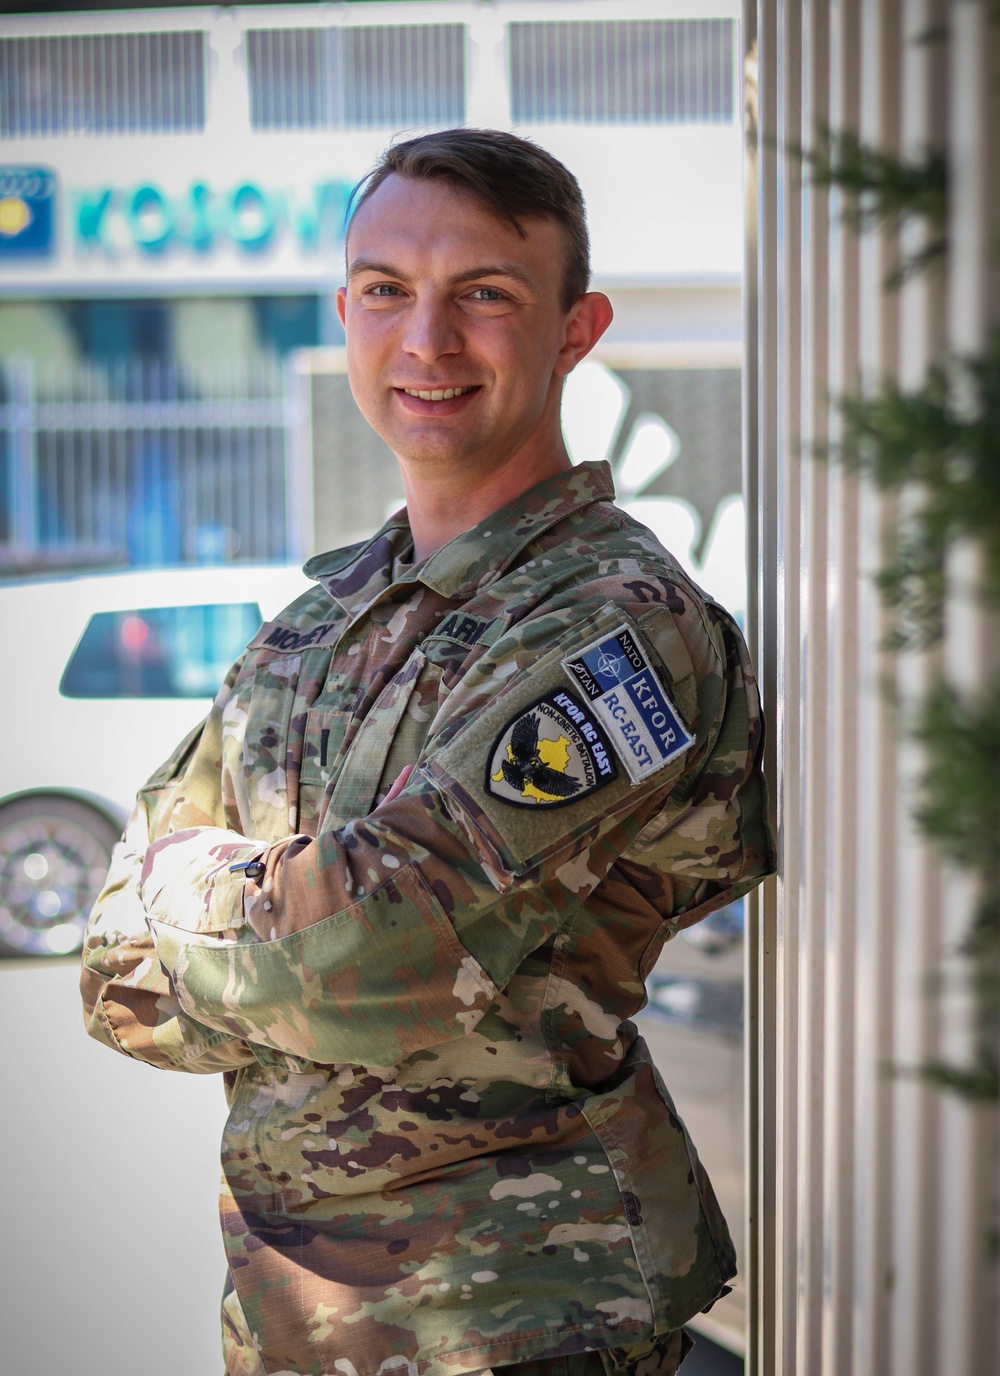 Oregon Citizen Soldier dedicates 2 years to Kosovo peacekeeping mission